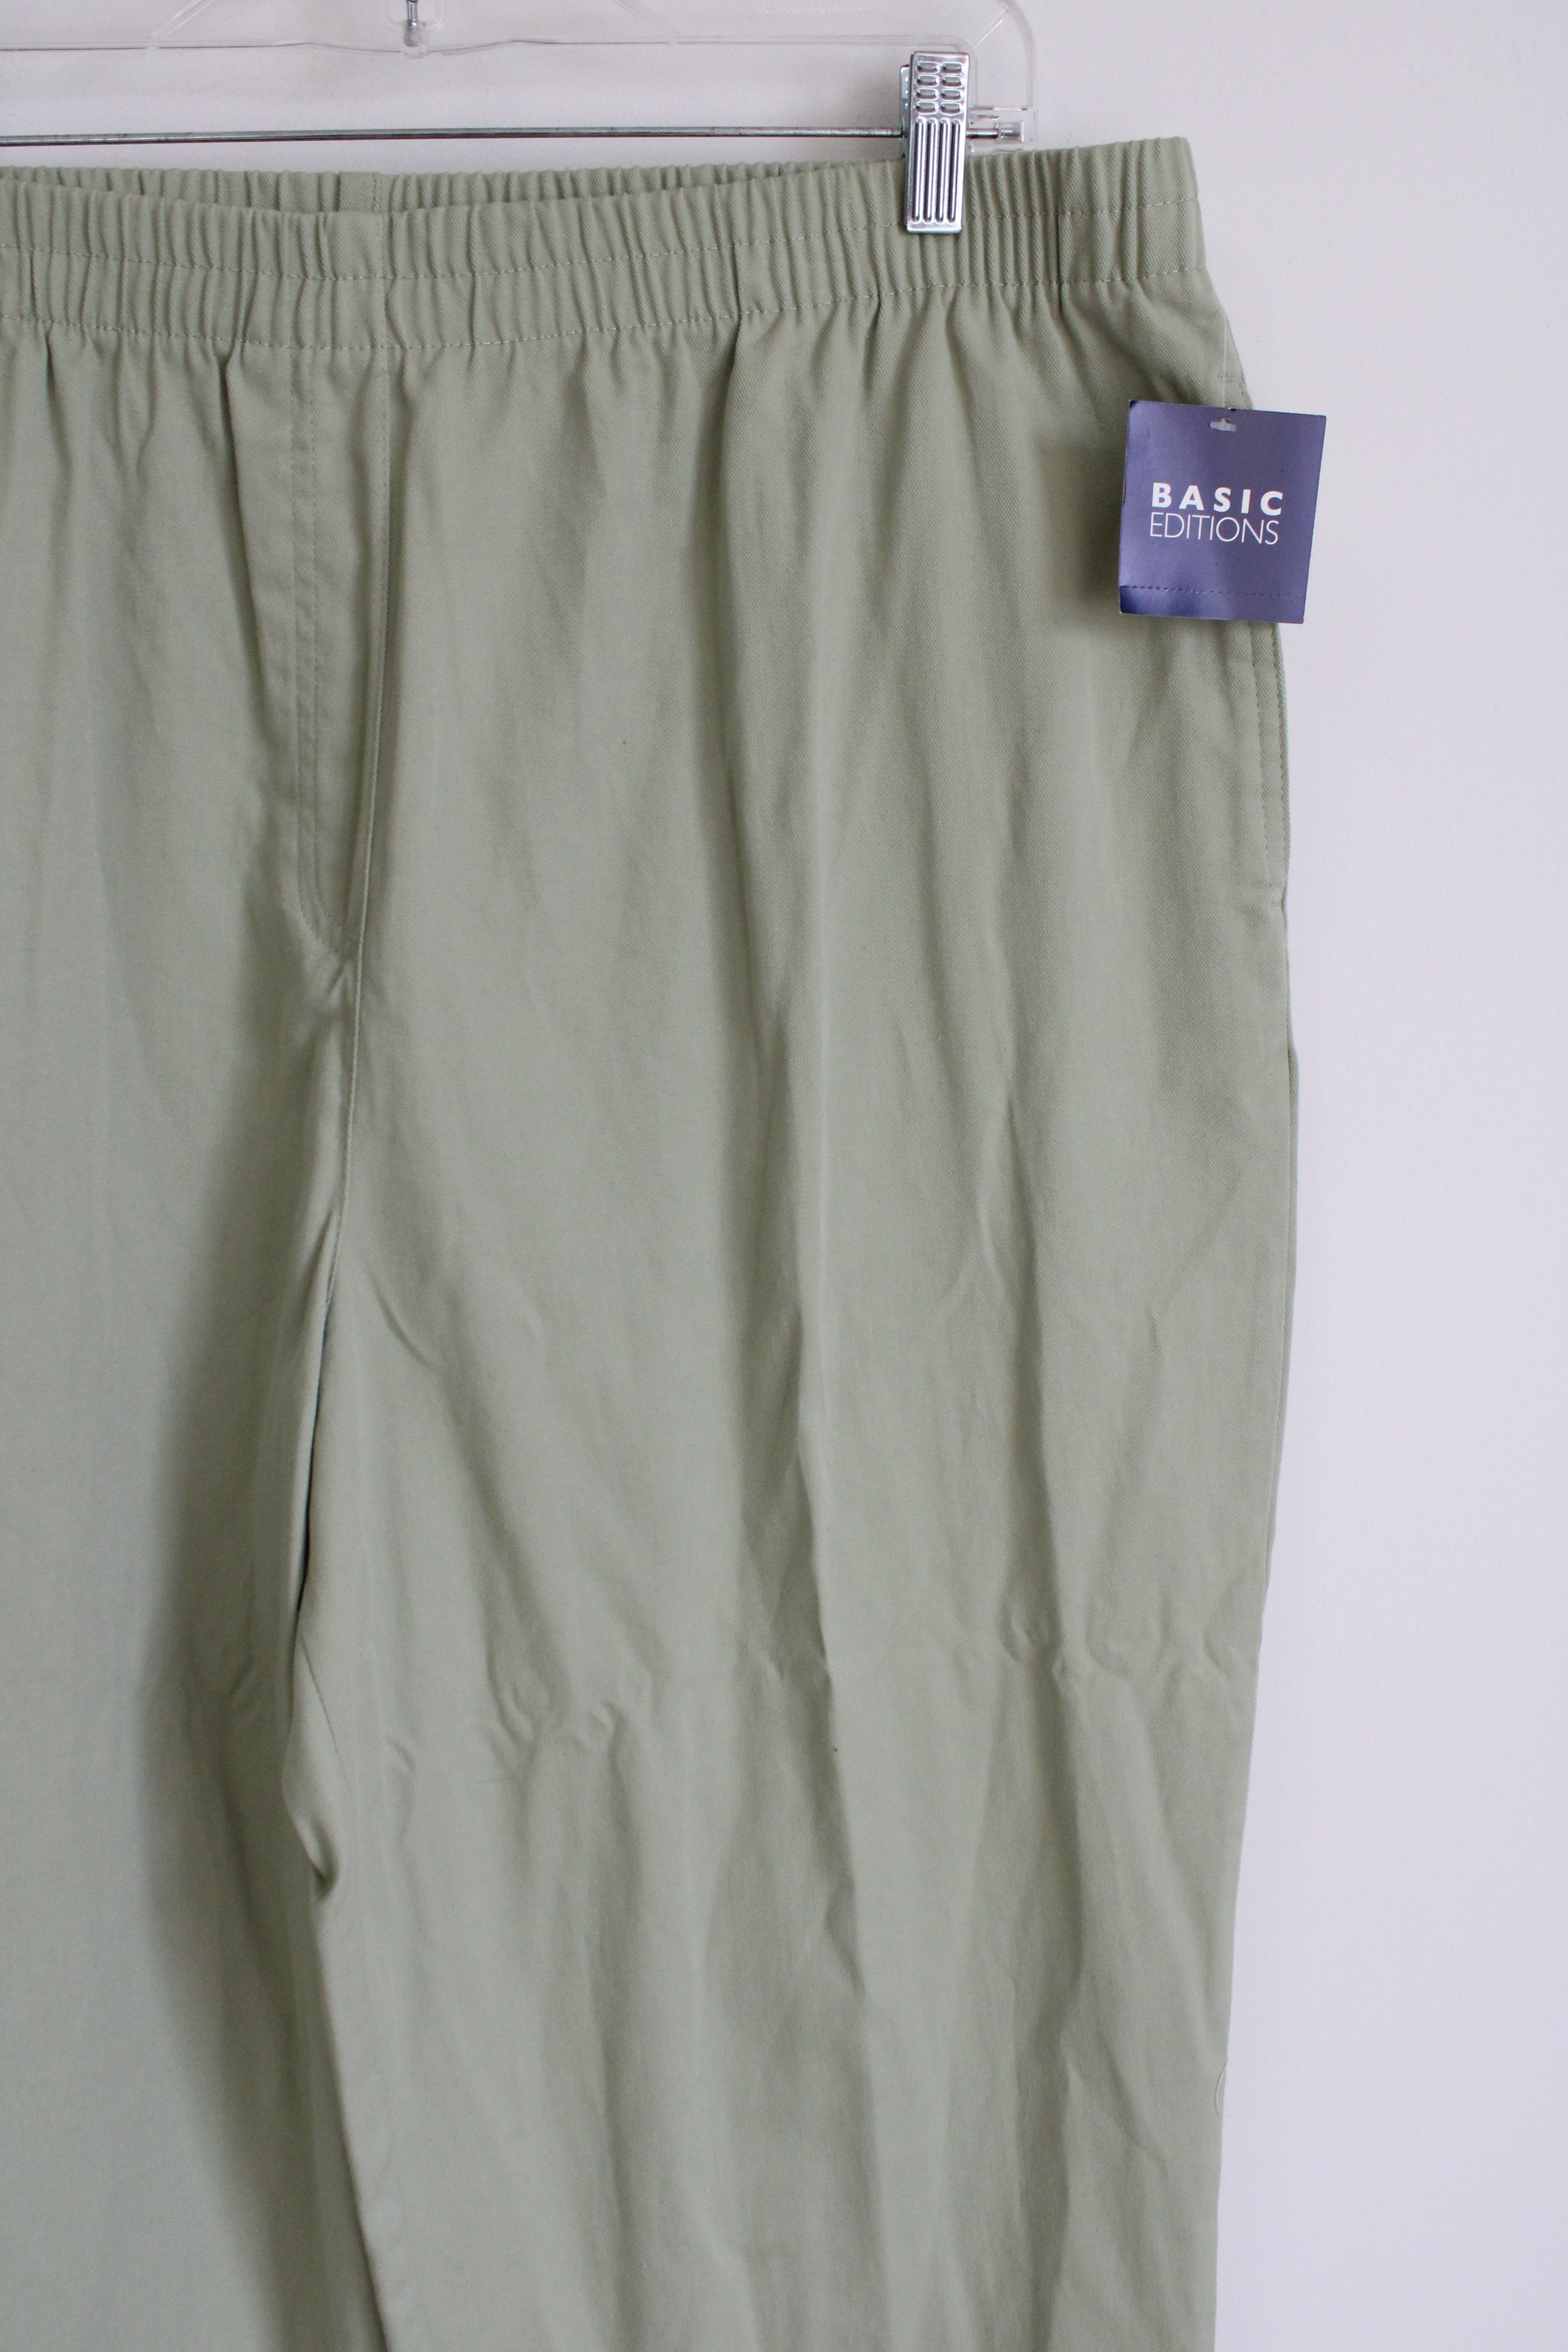 NEW Basic Editions Twill Green Pant | 2X Short